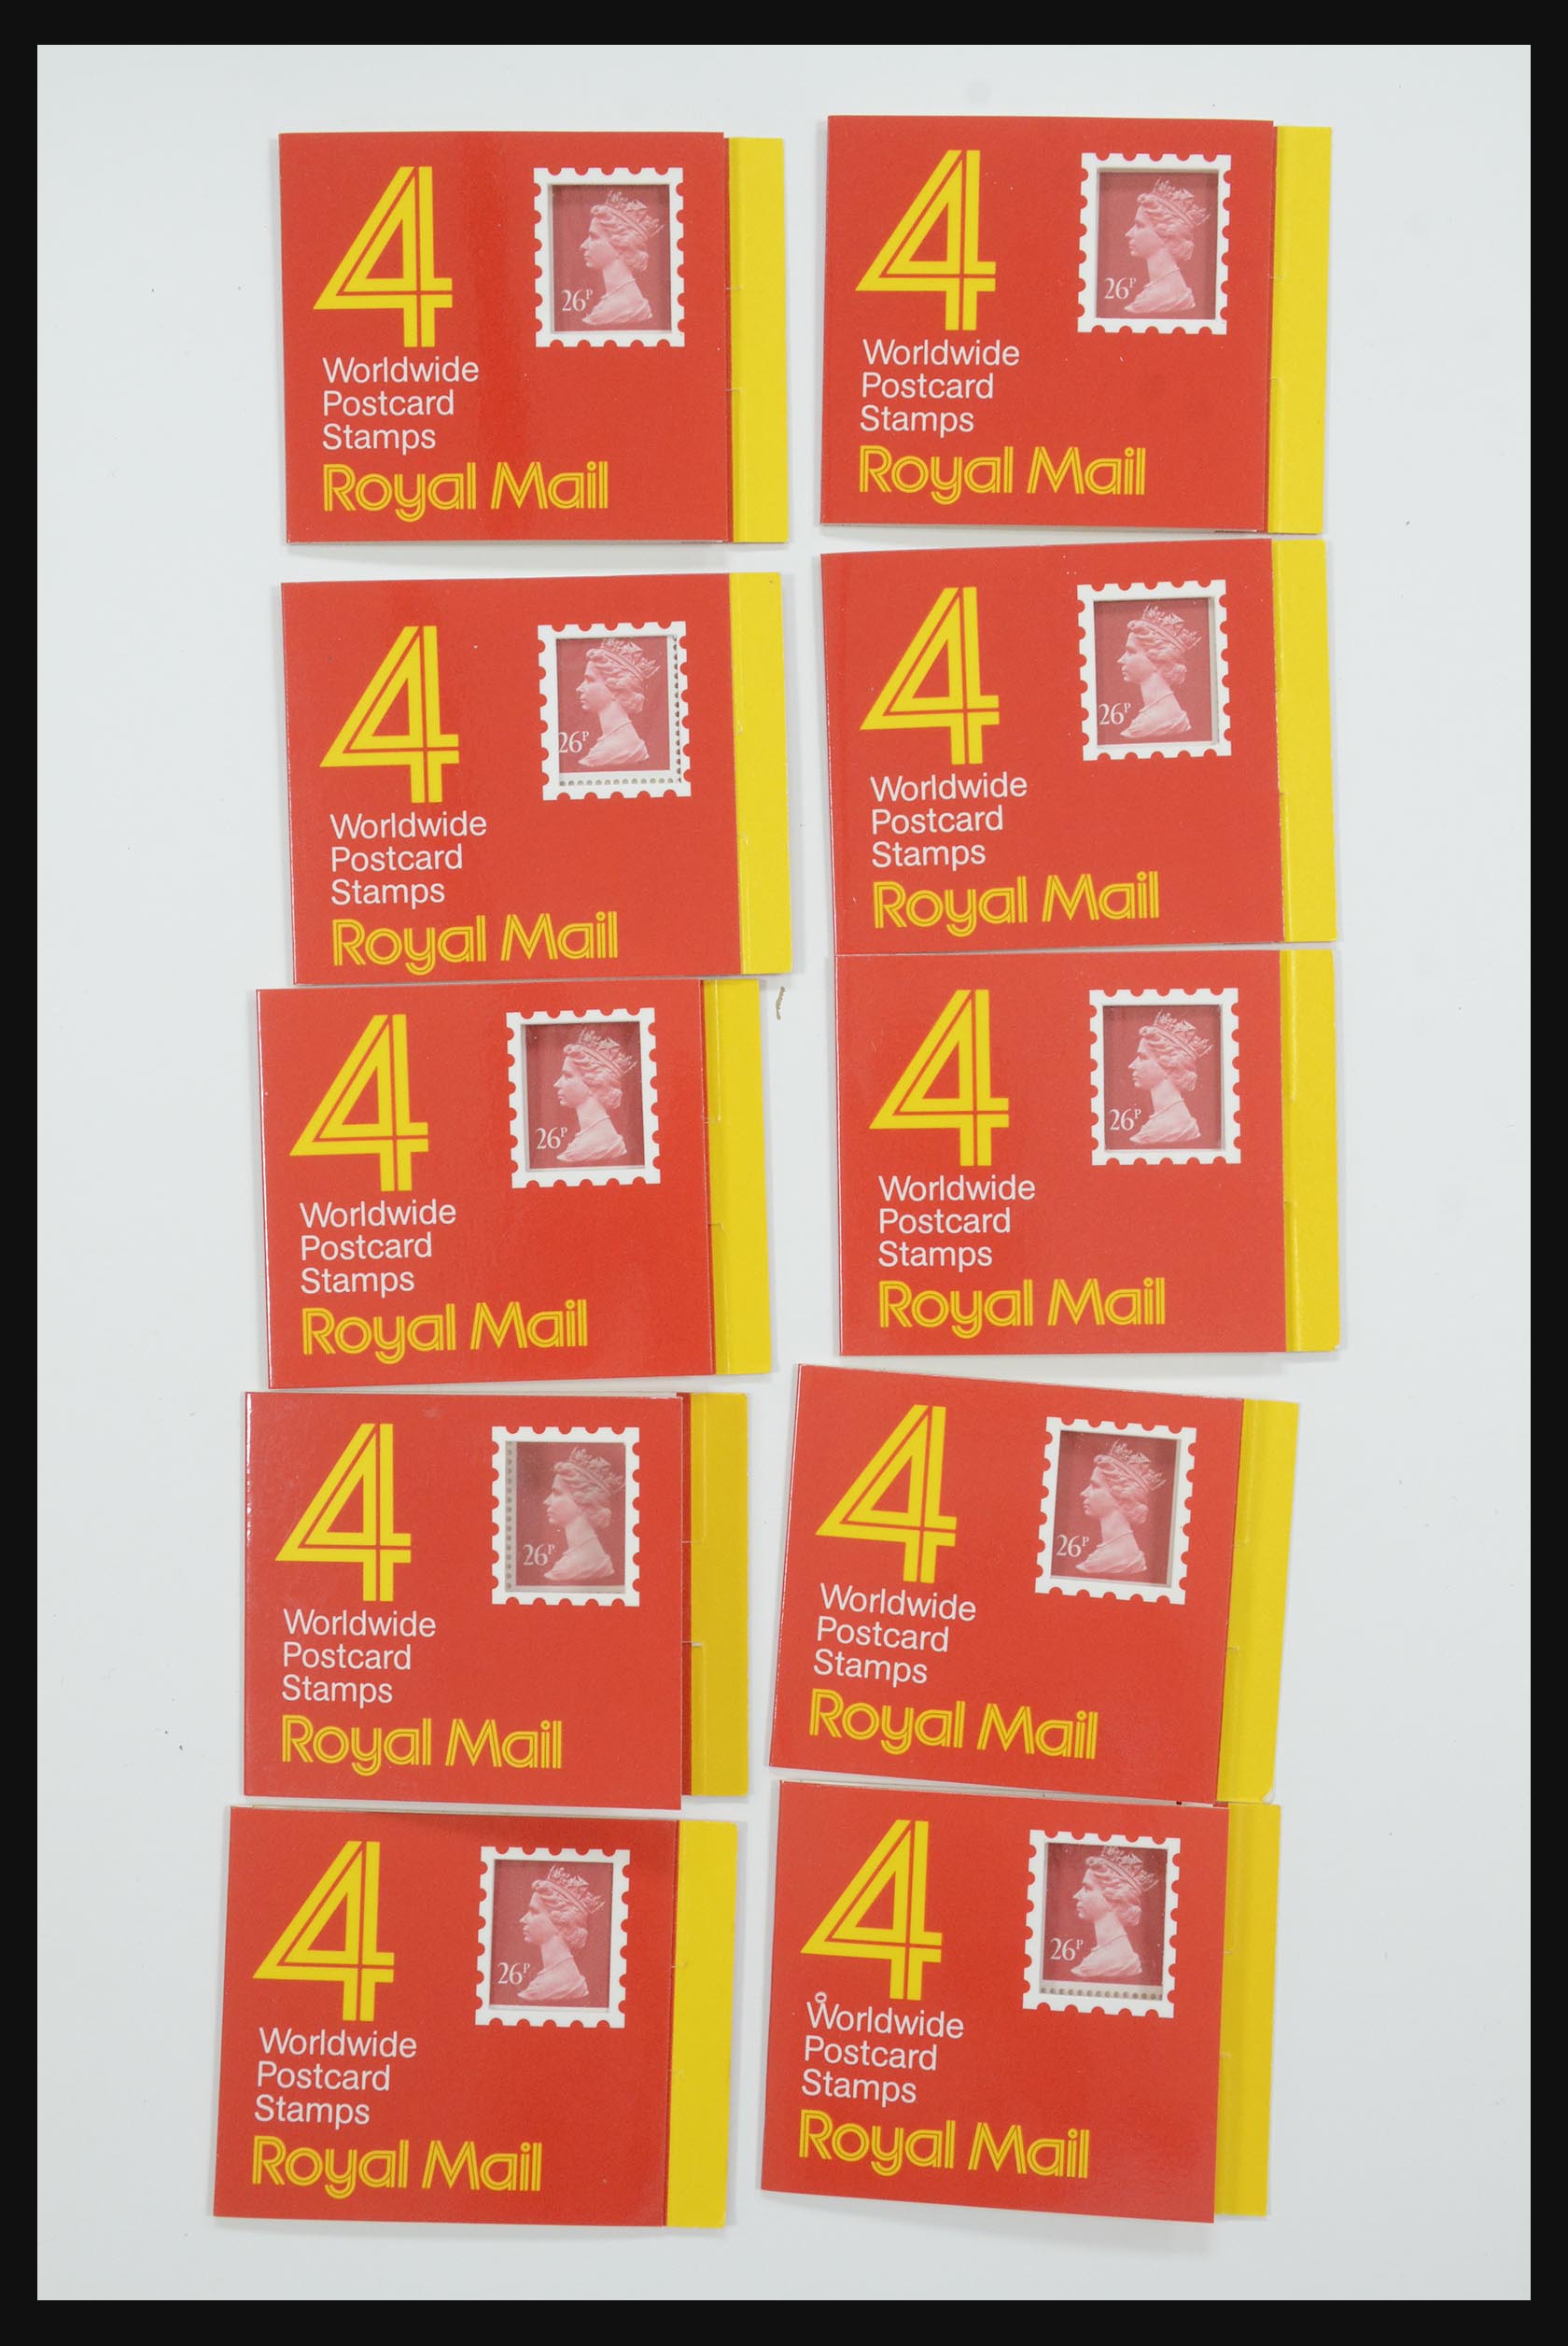 31961 069 - 31961 Great Britain stampbooklets 1971-1999.